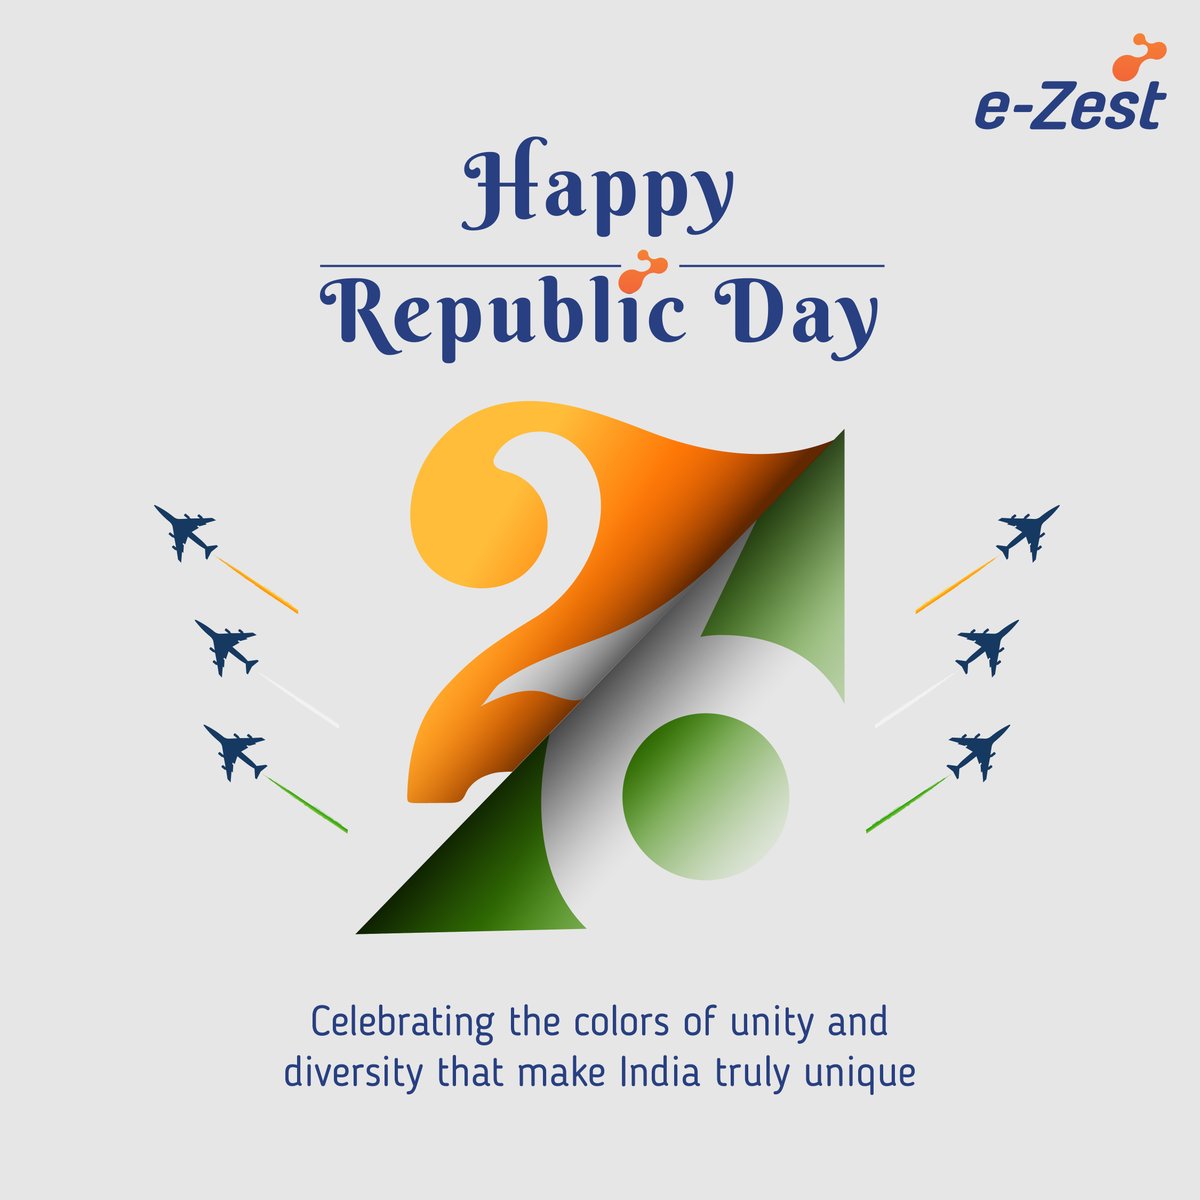 Celebrating the spirit of unity, freedom, and innovation this Republic Day! #HappyRepublicDay #eZest